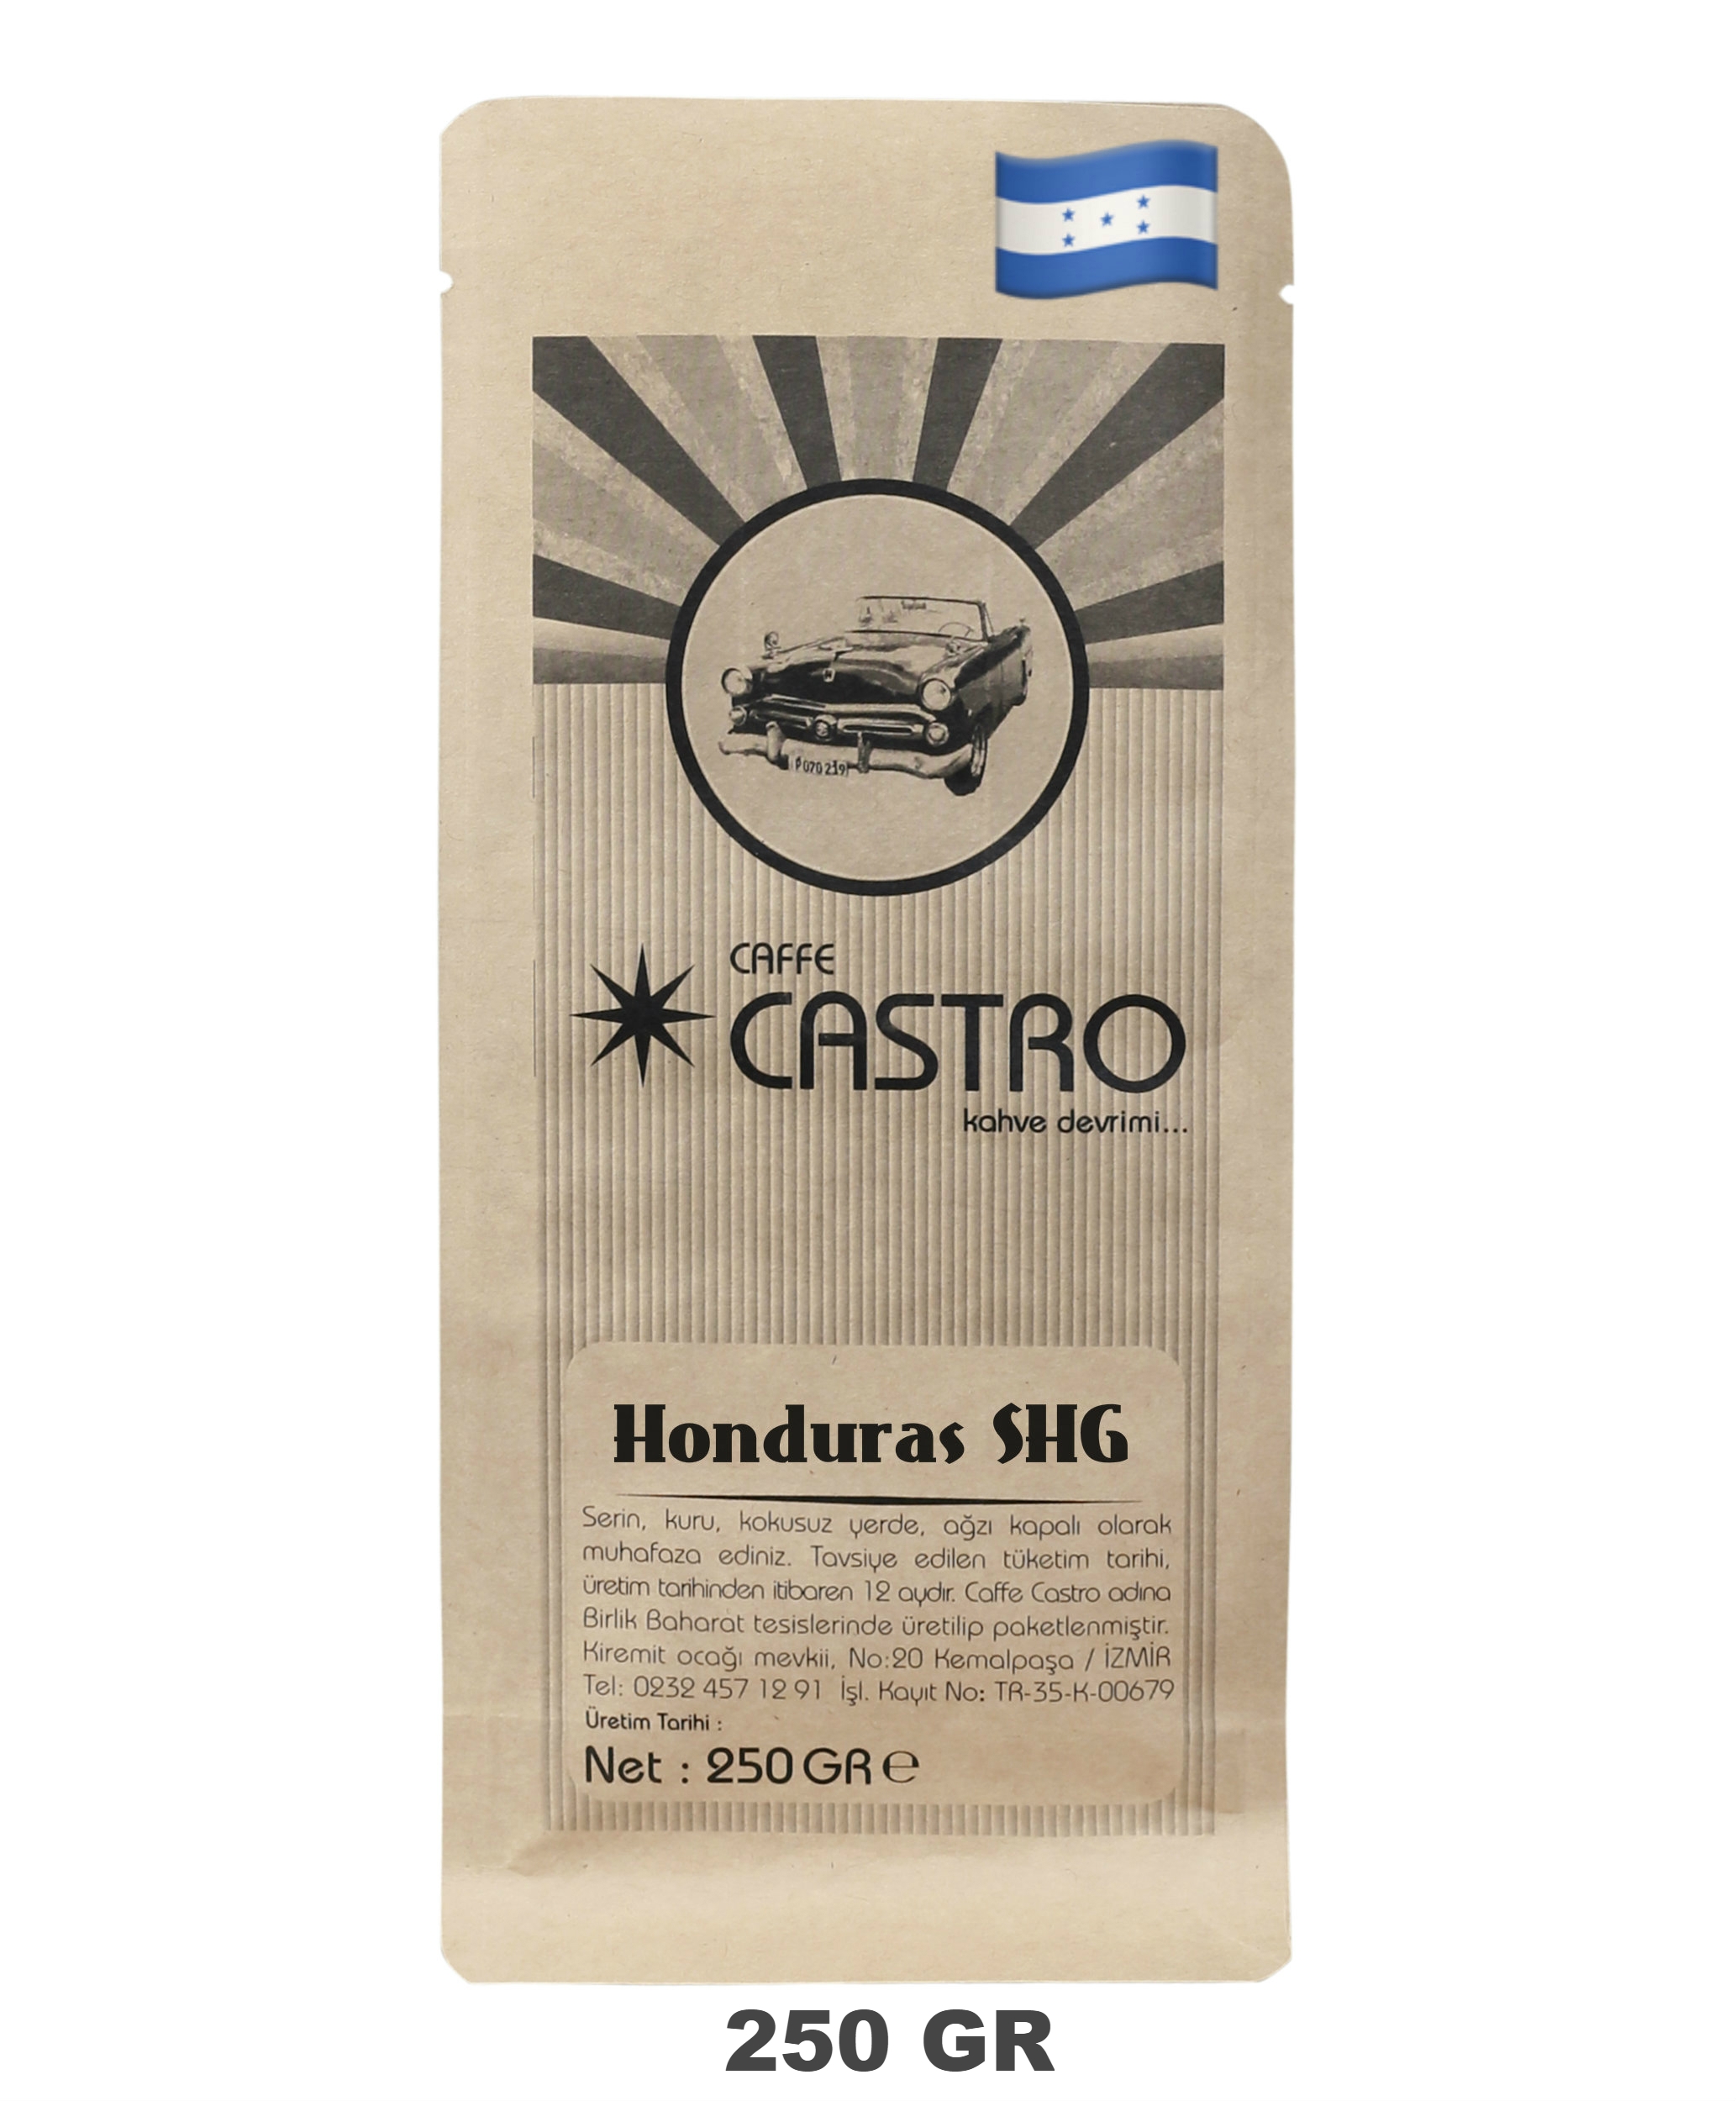 Honduras SHG Yöresel Dünya Kahvesi 250 Gr.